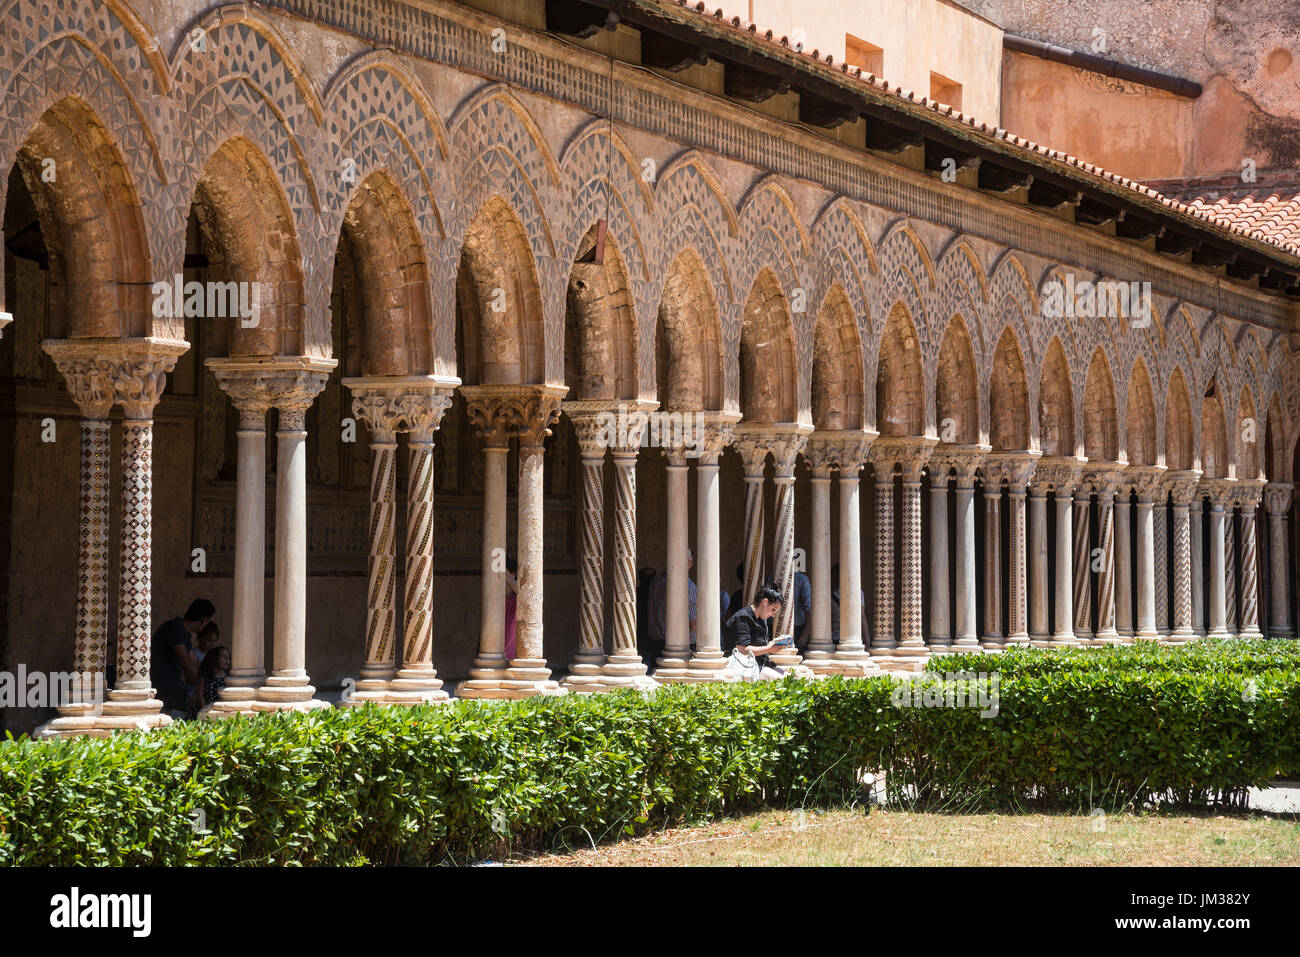 The Chiostro dei Benedettini, cloisters, in the cathedral complex at Monreale near Palermo, Sicily, Italy. Stock Photo